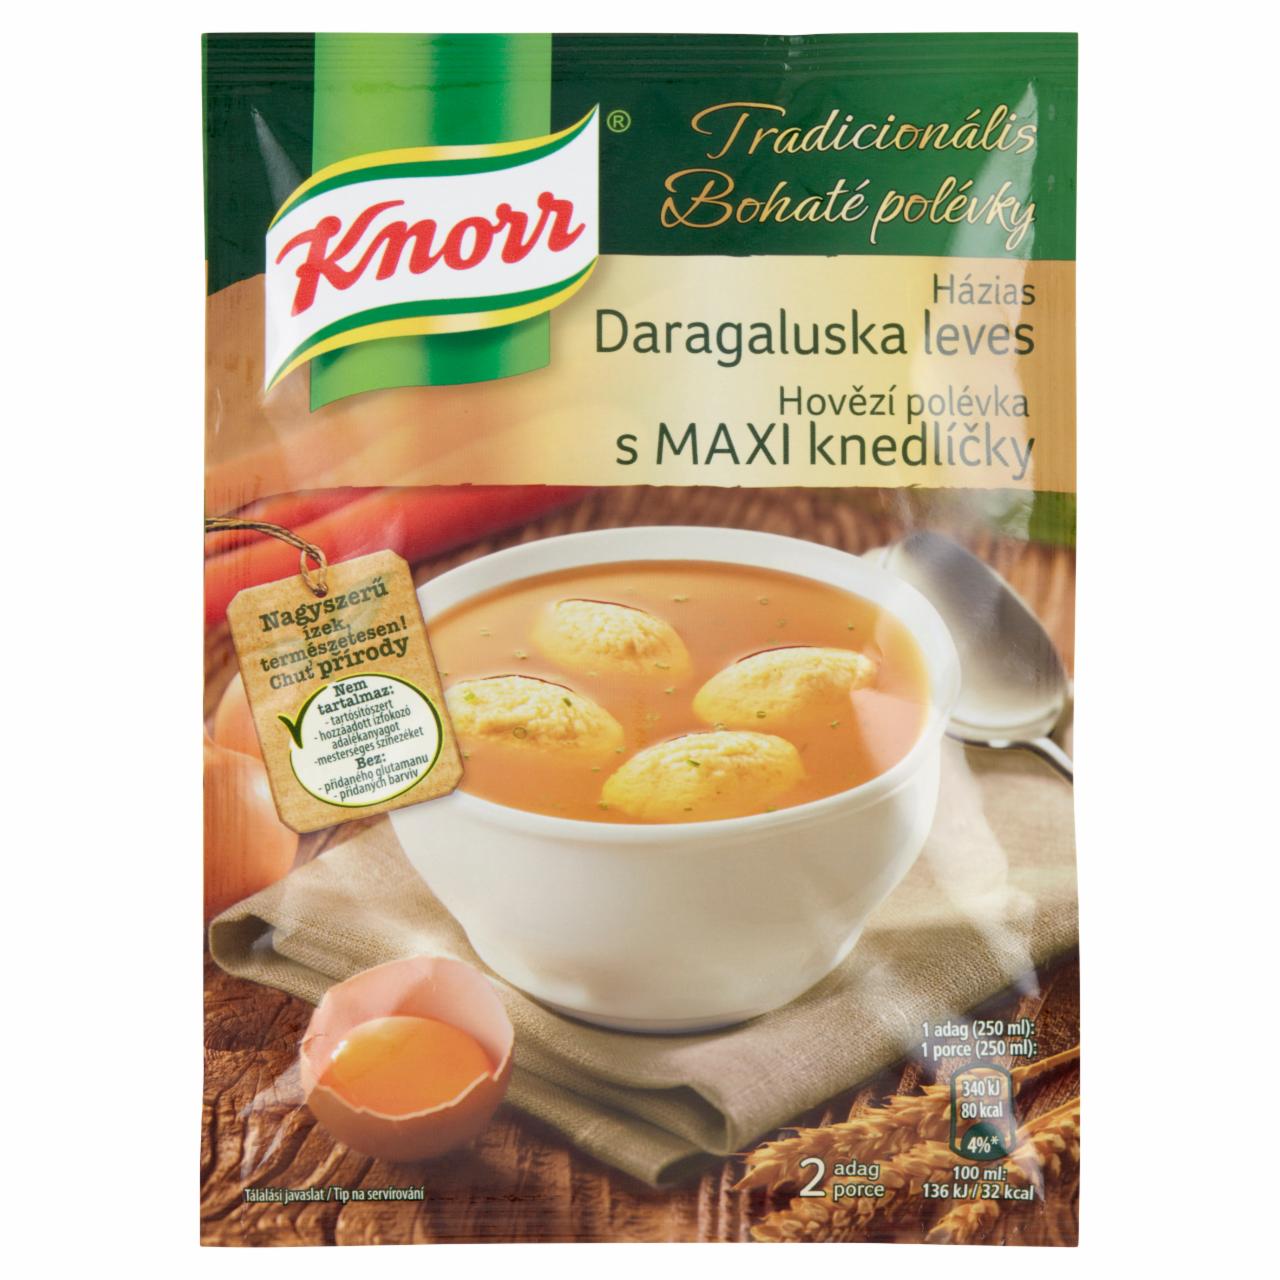 Képek - Knorr Tradicionális házias daragaluska leves 63 g